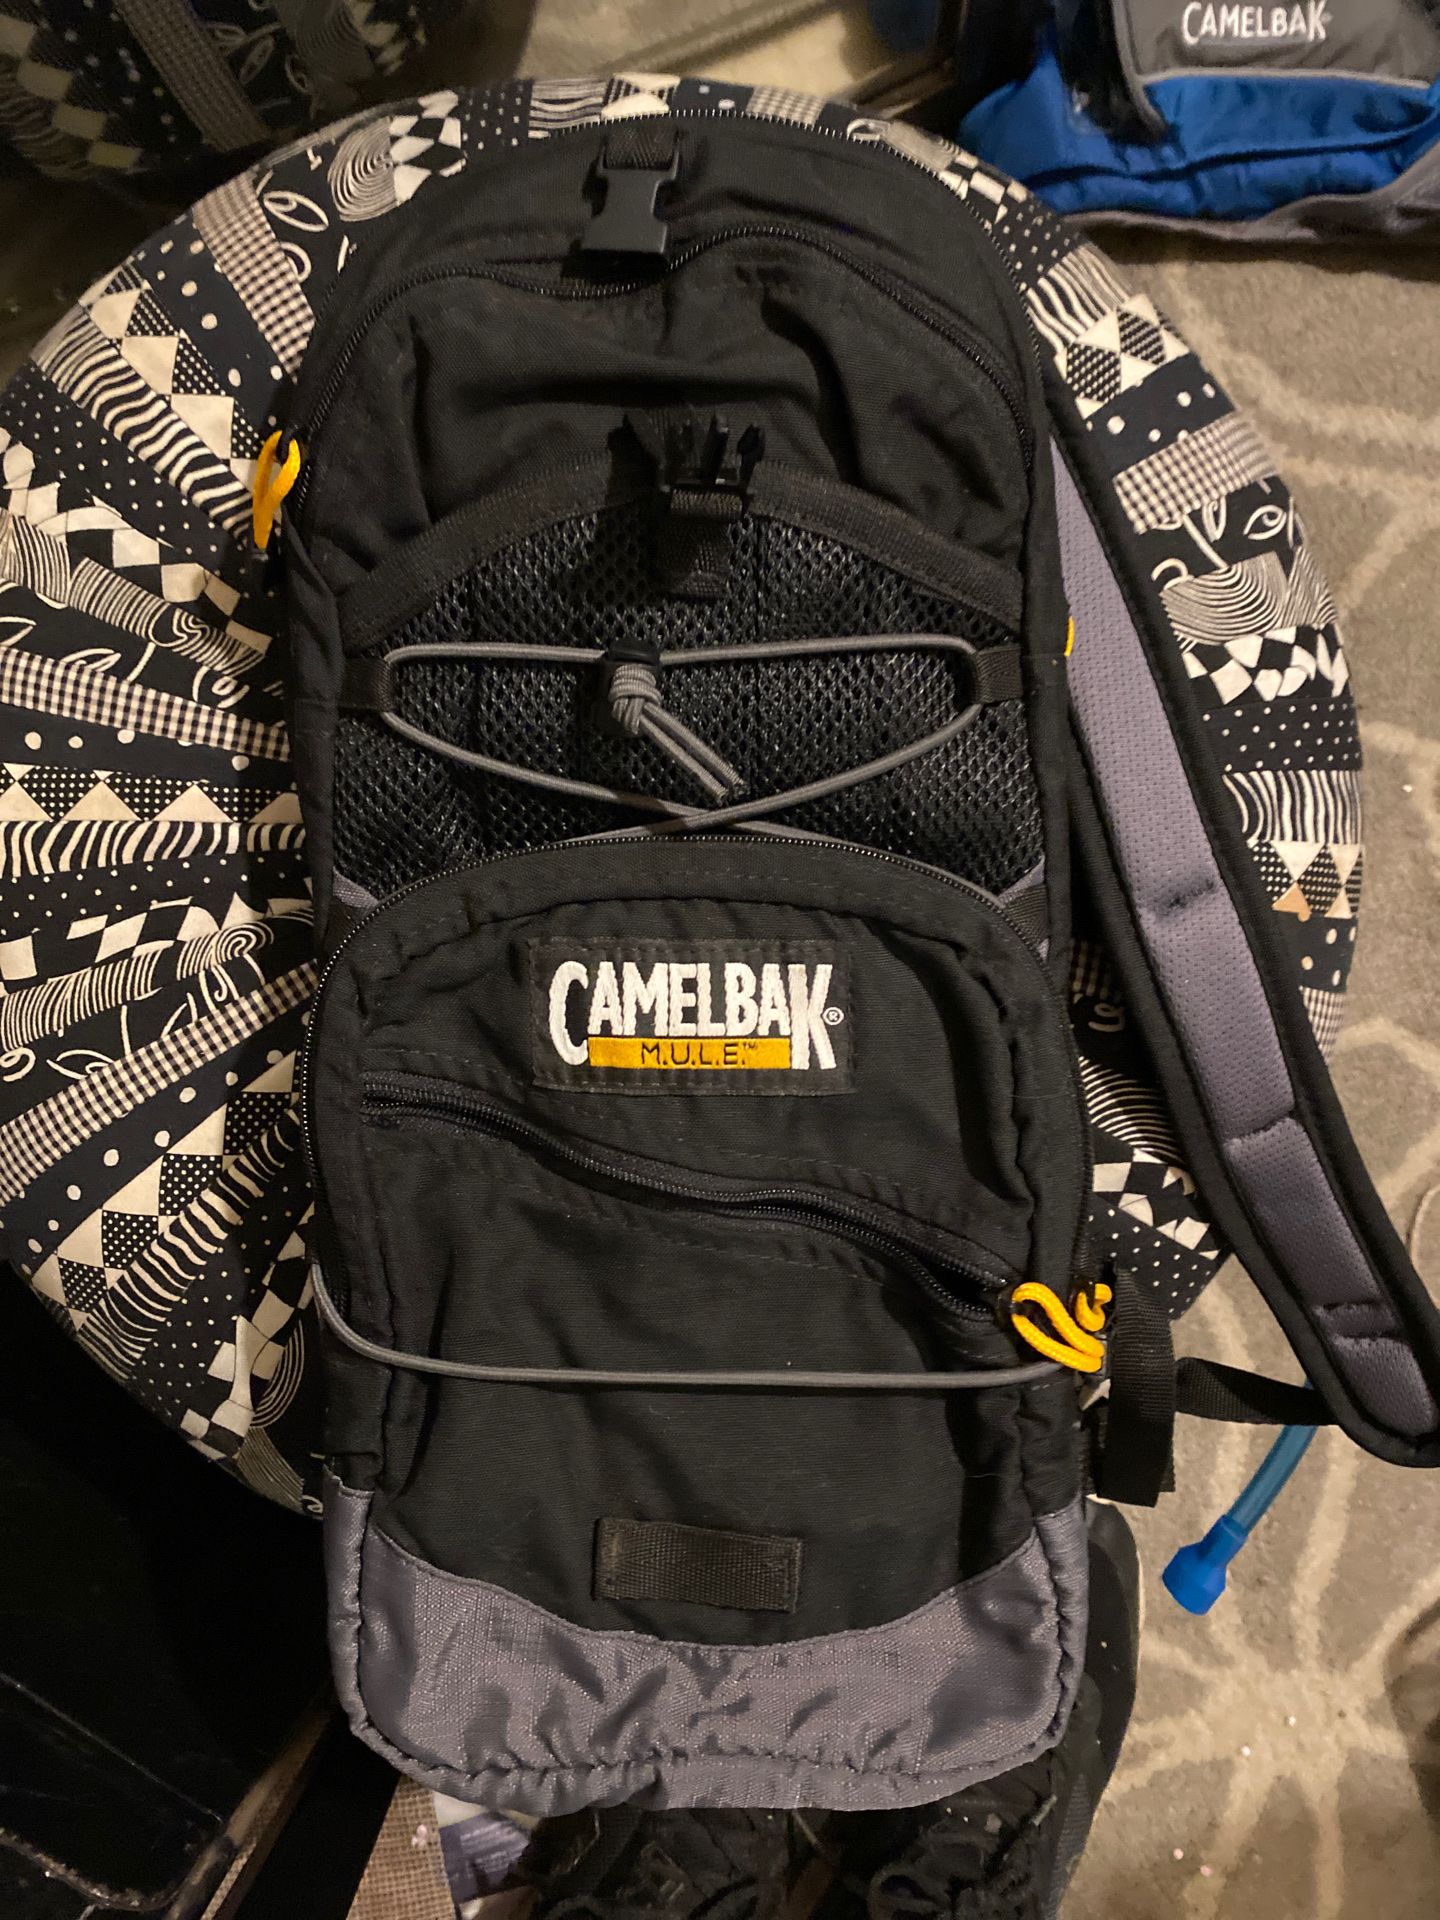 Camelback Hydration backpack